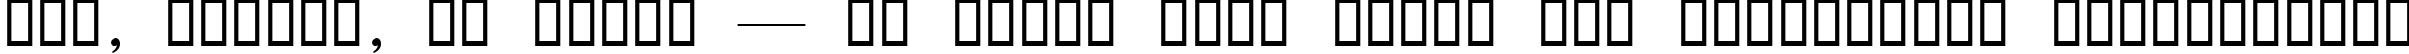 Пример написания шрифтом KacstOneFixed текста на украинском